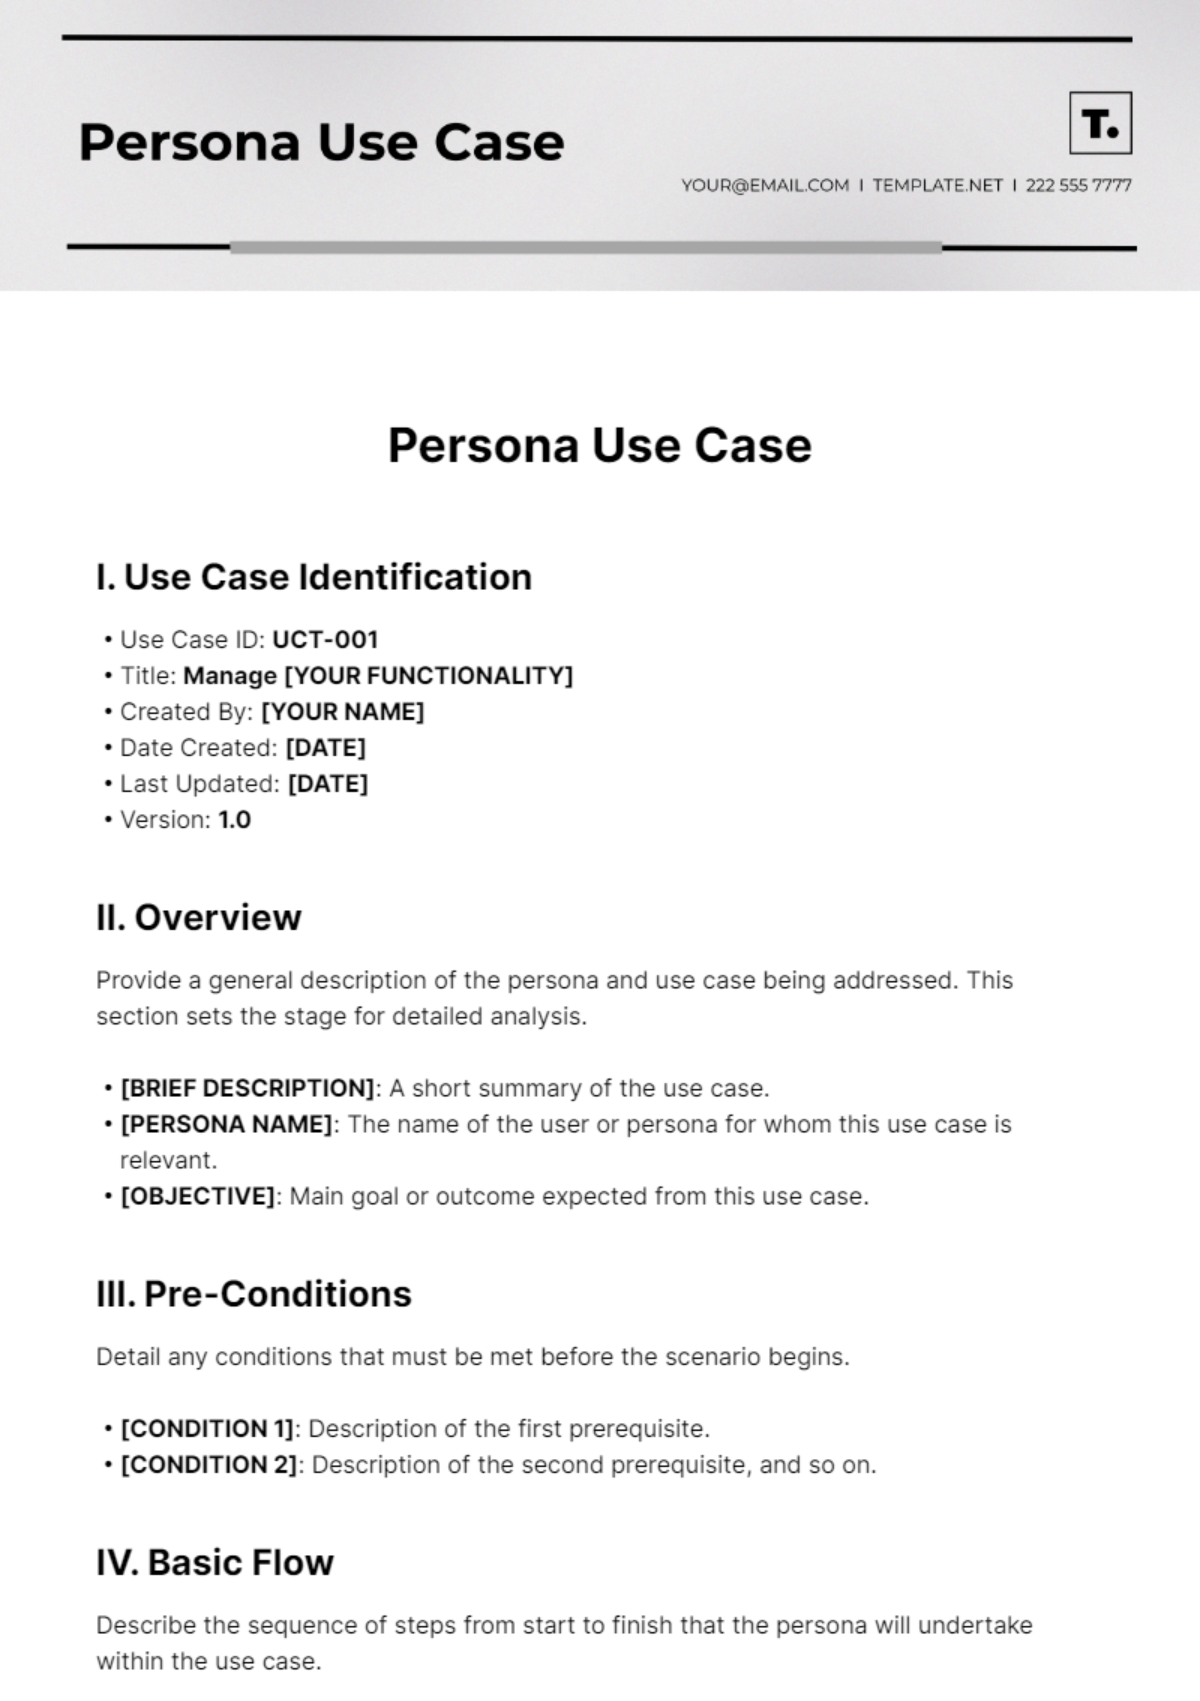 Persona Use Case Template